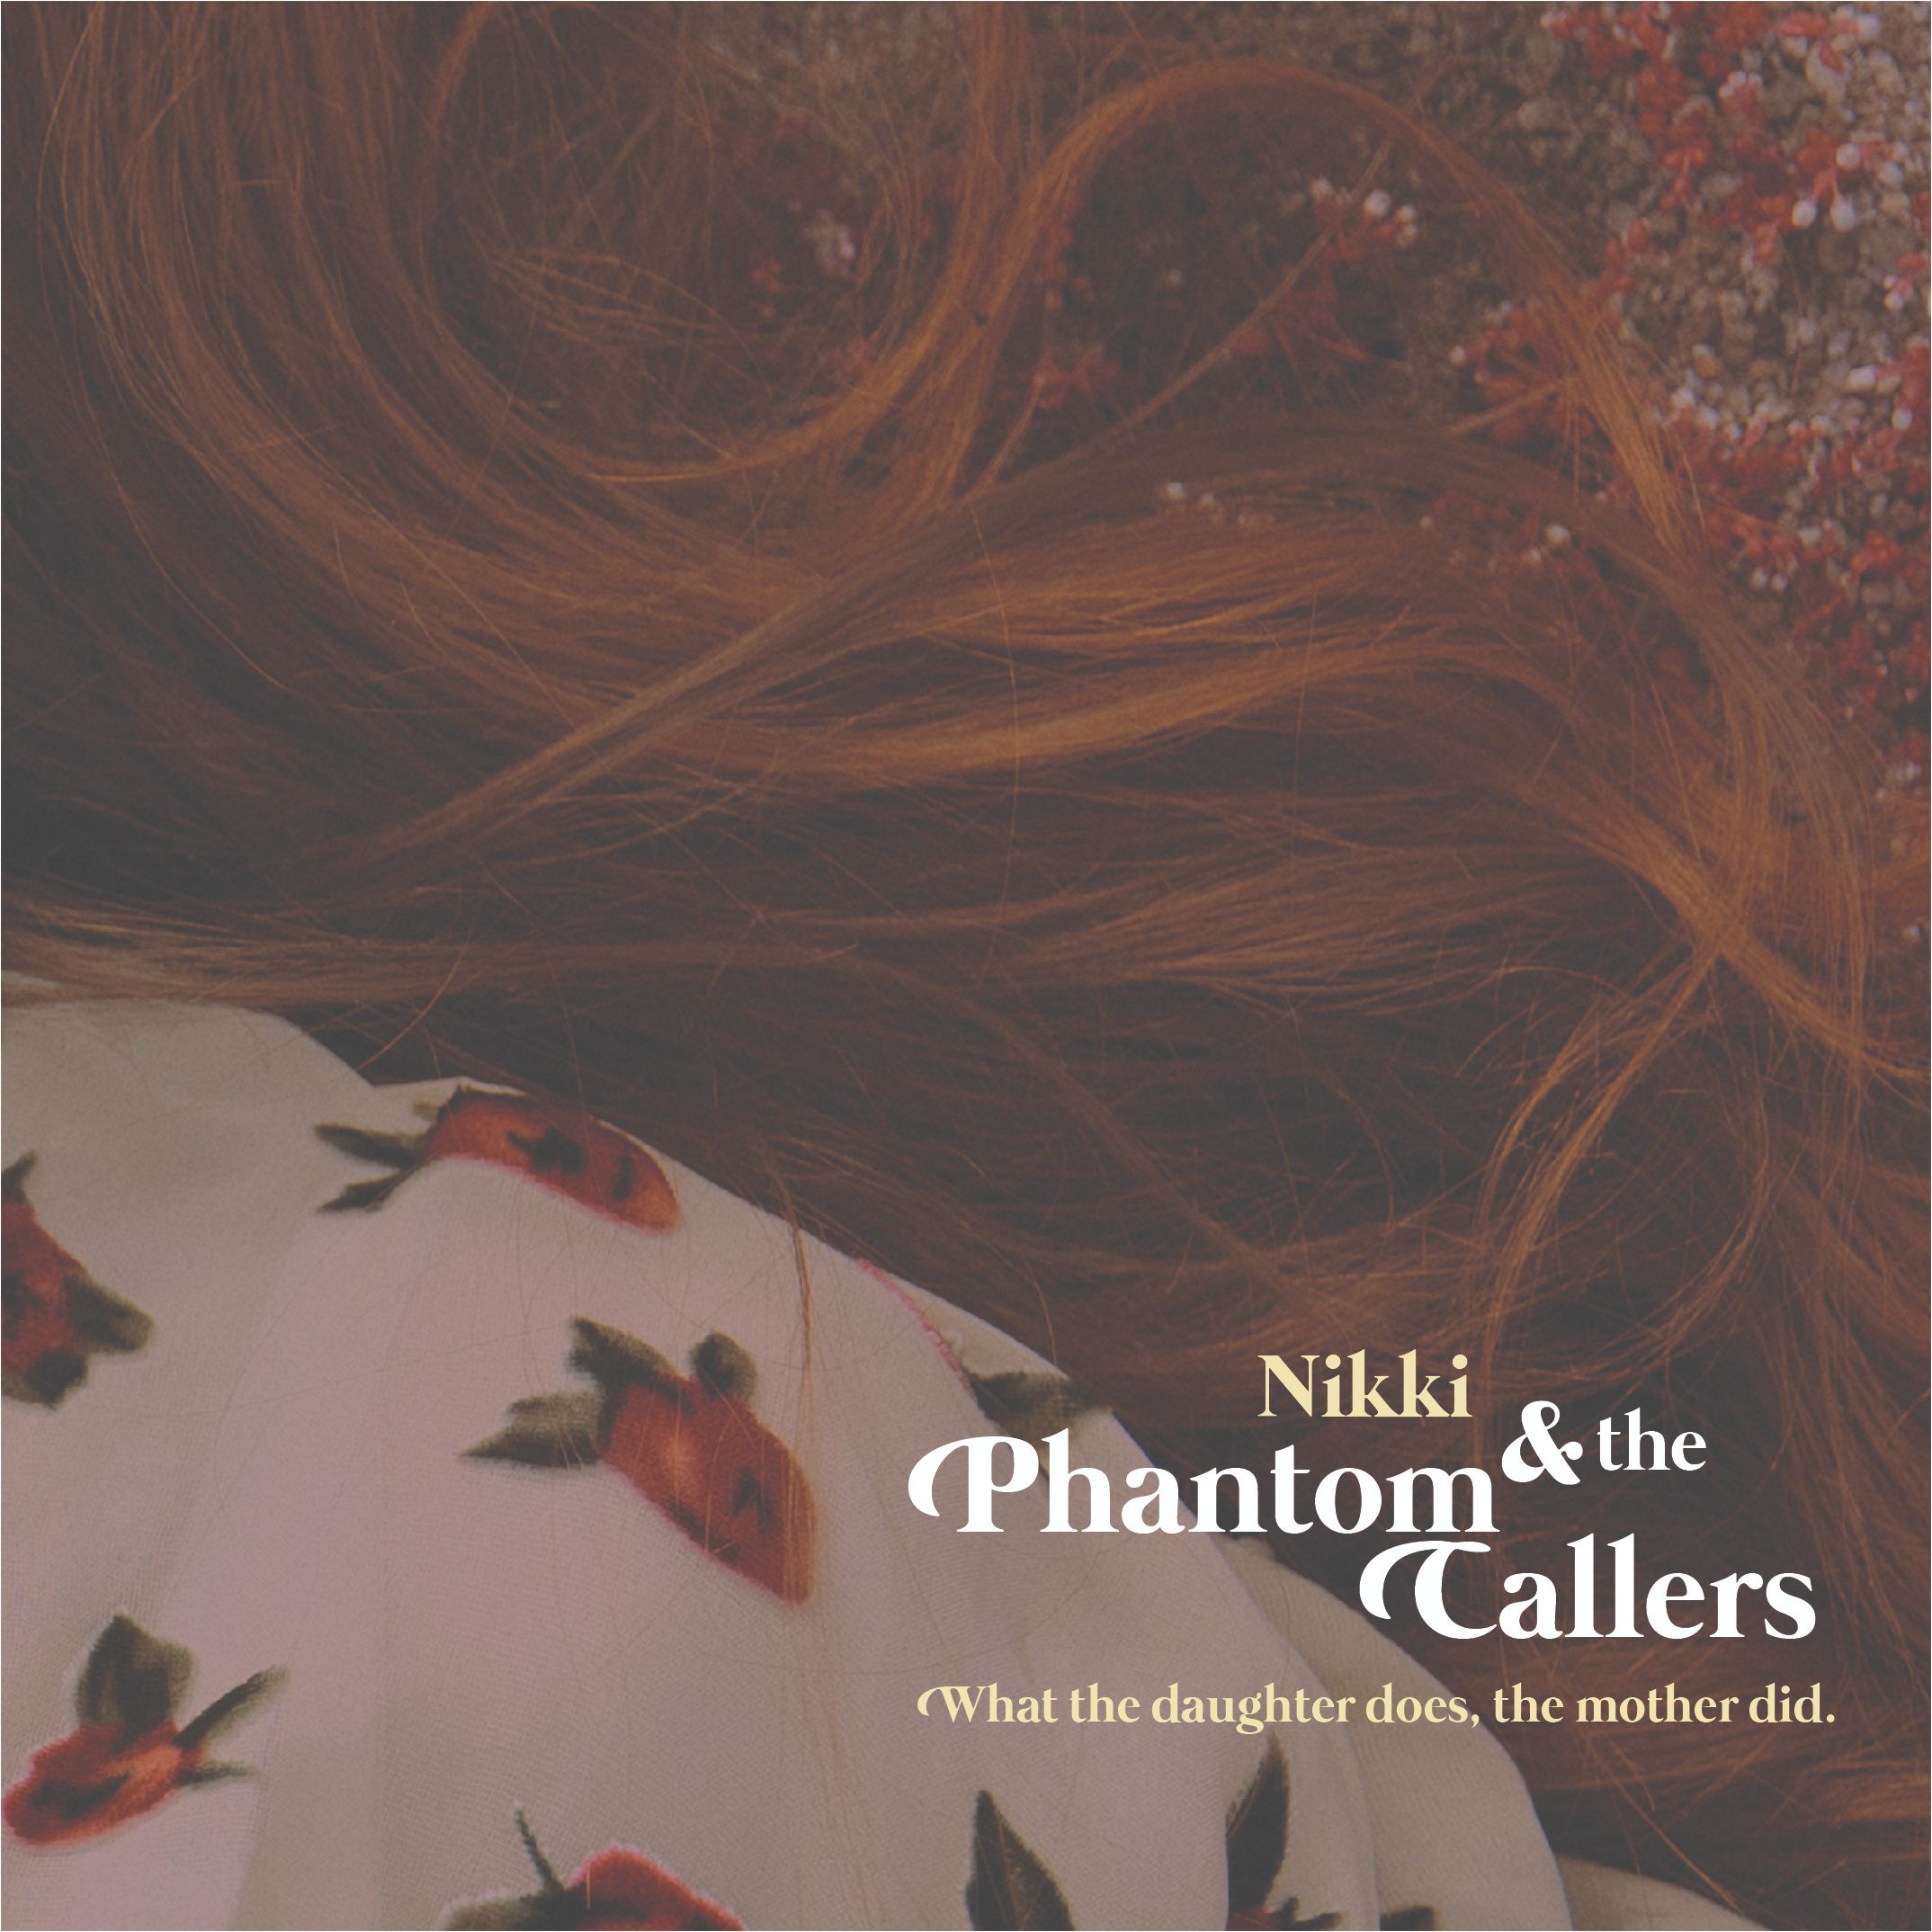 Nikki & The Phantom Callers – “Prodigal Daughter”